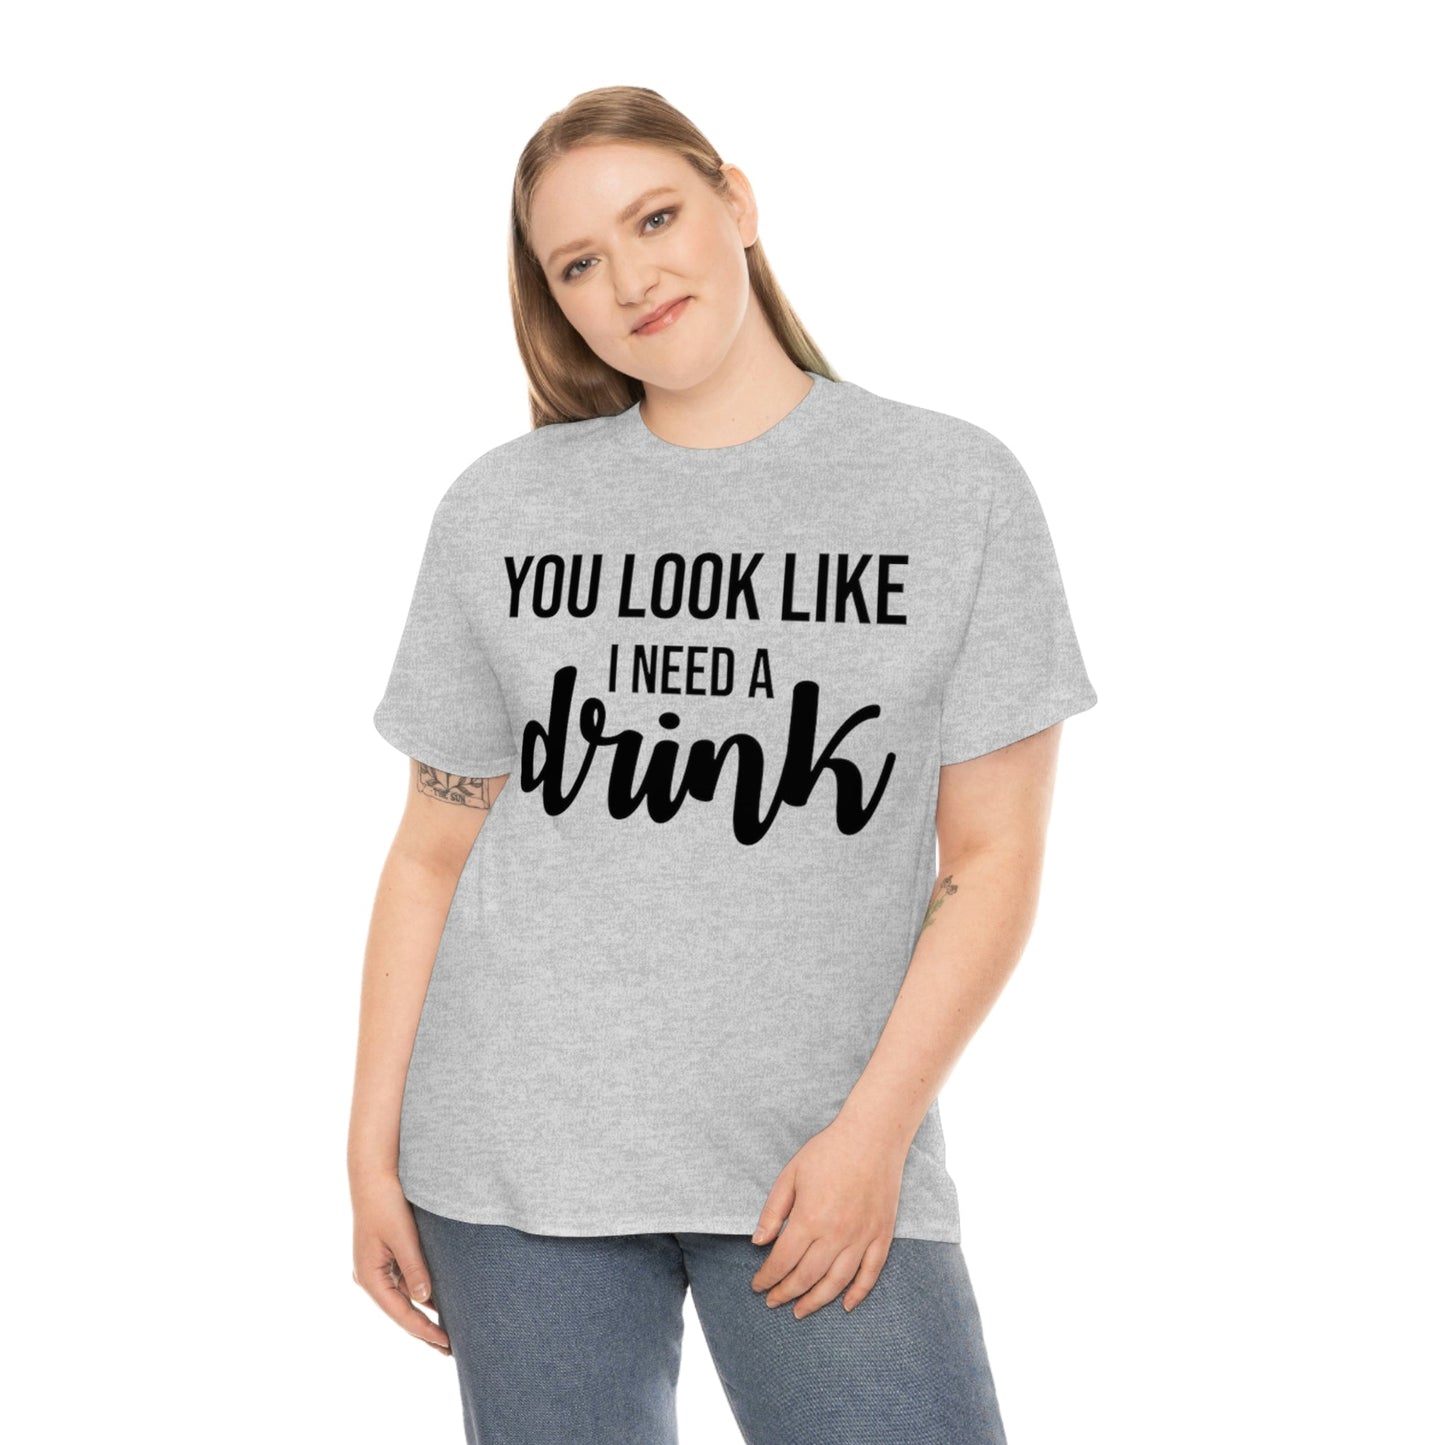 You Look Like I Need a Drink T-Shirt - RetroTeeShop